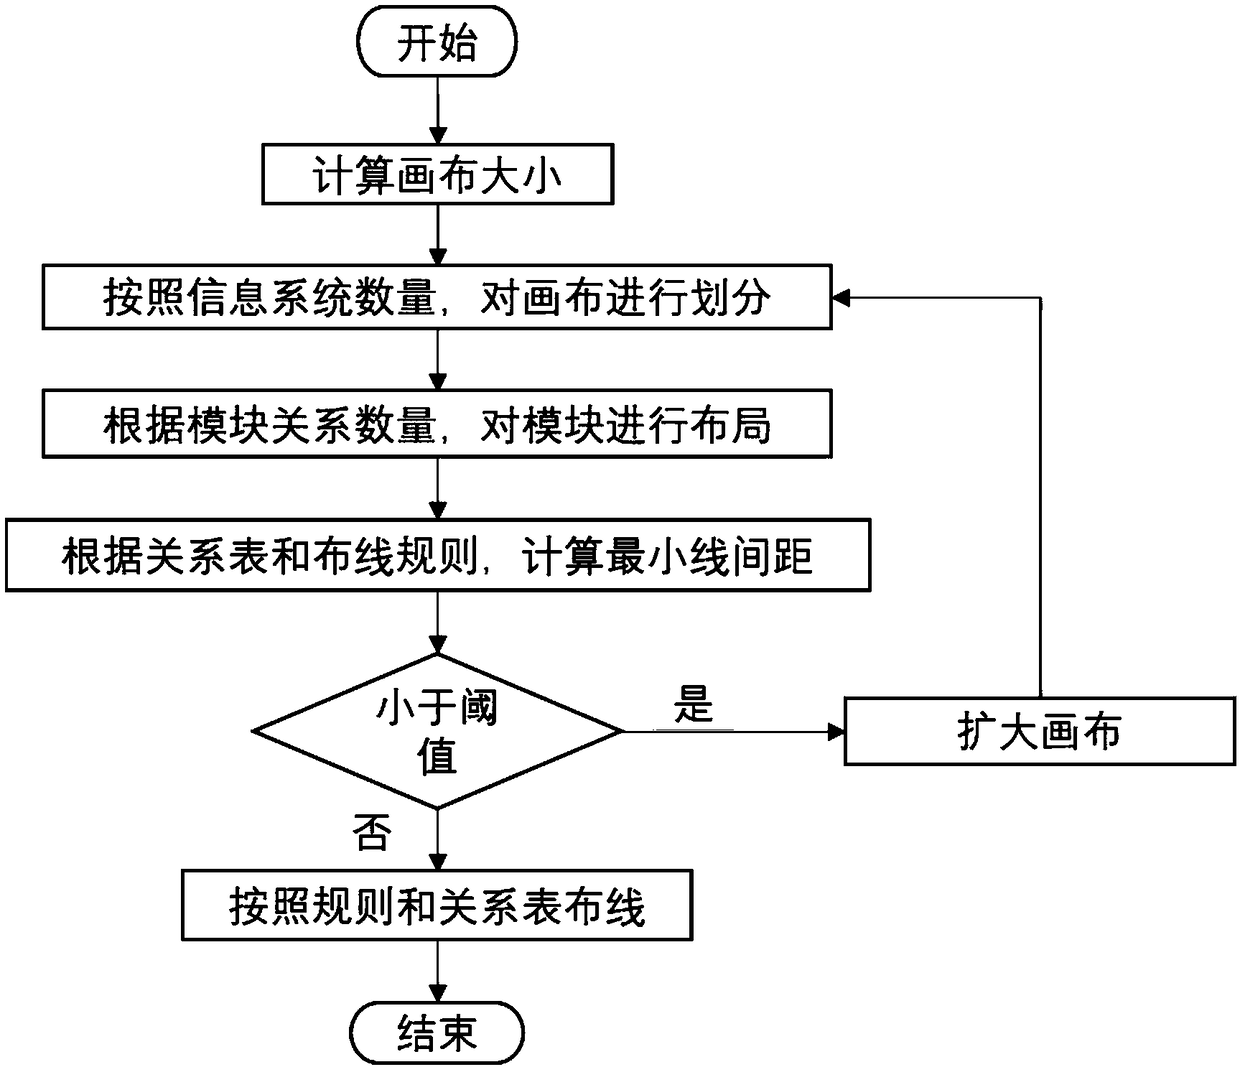 An automatic arrangement method for an enterprise informatization relation graph